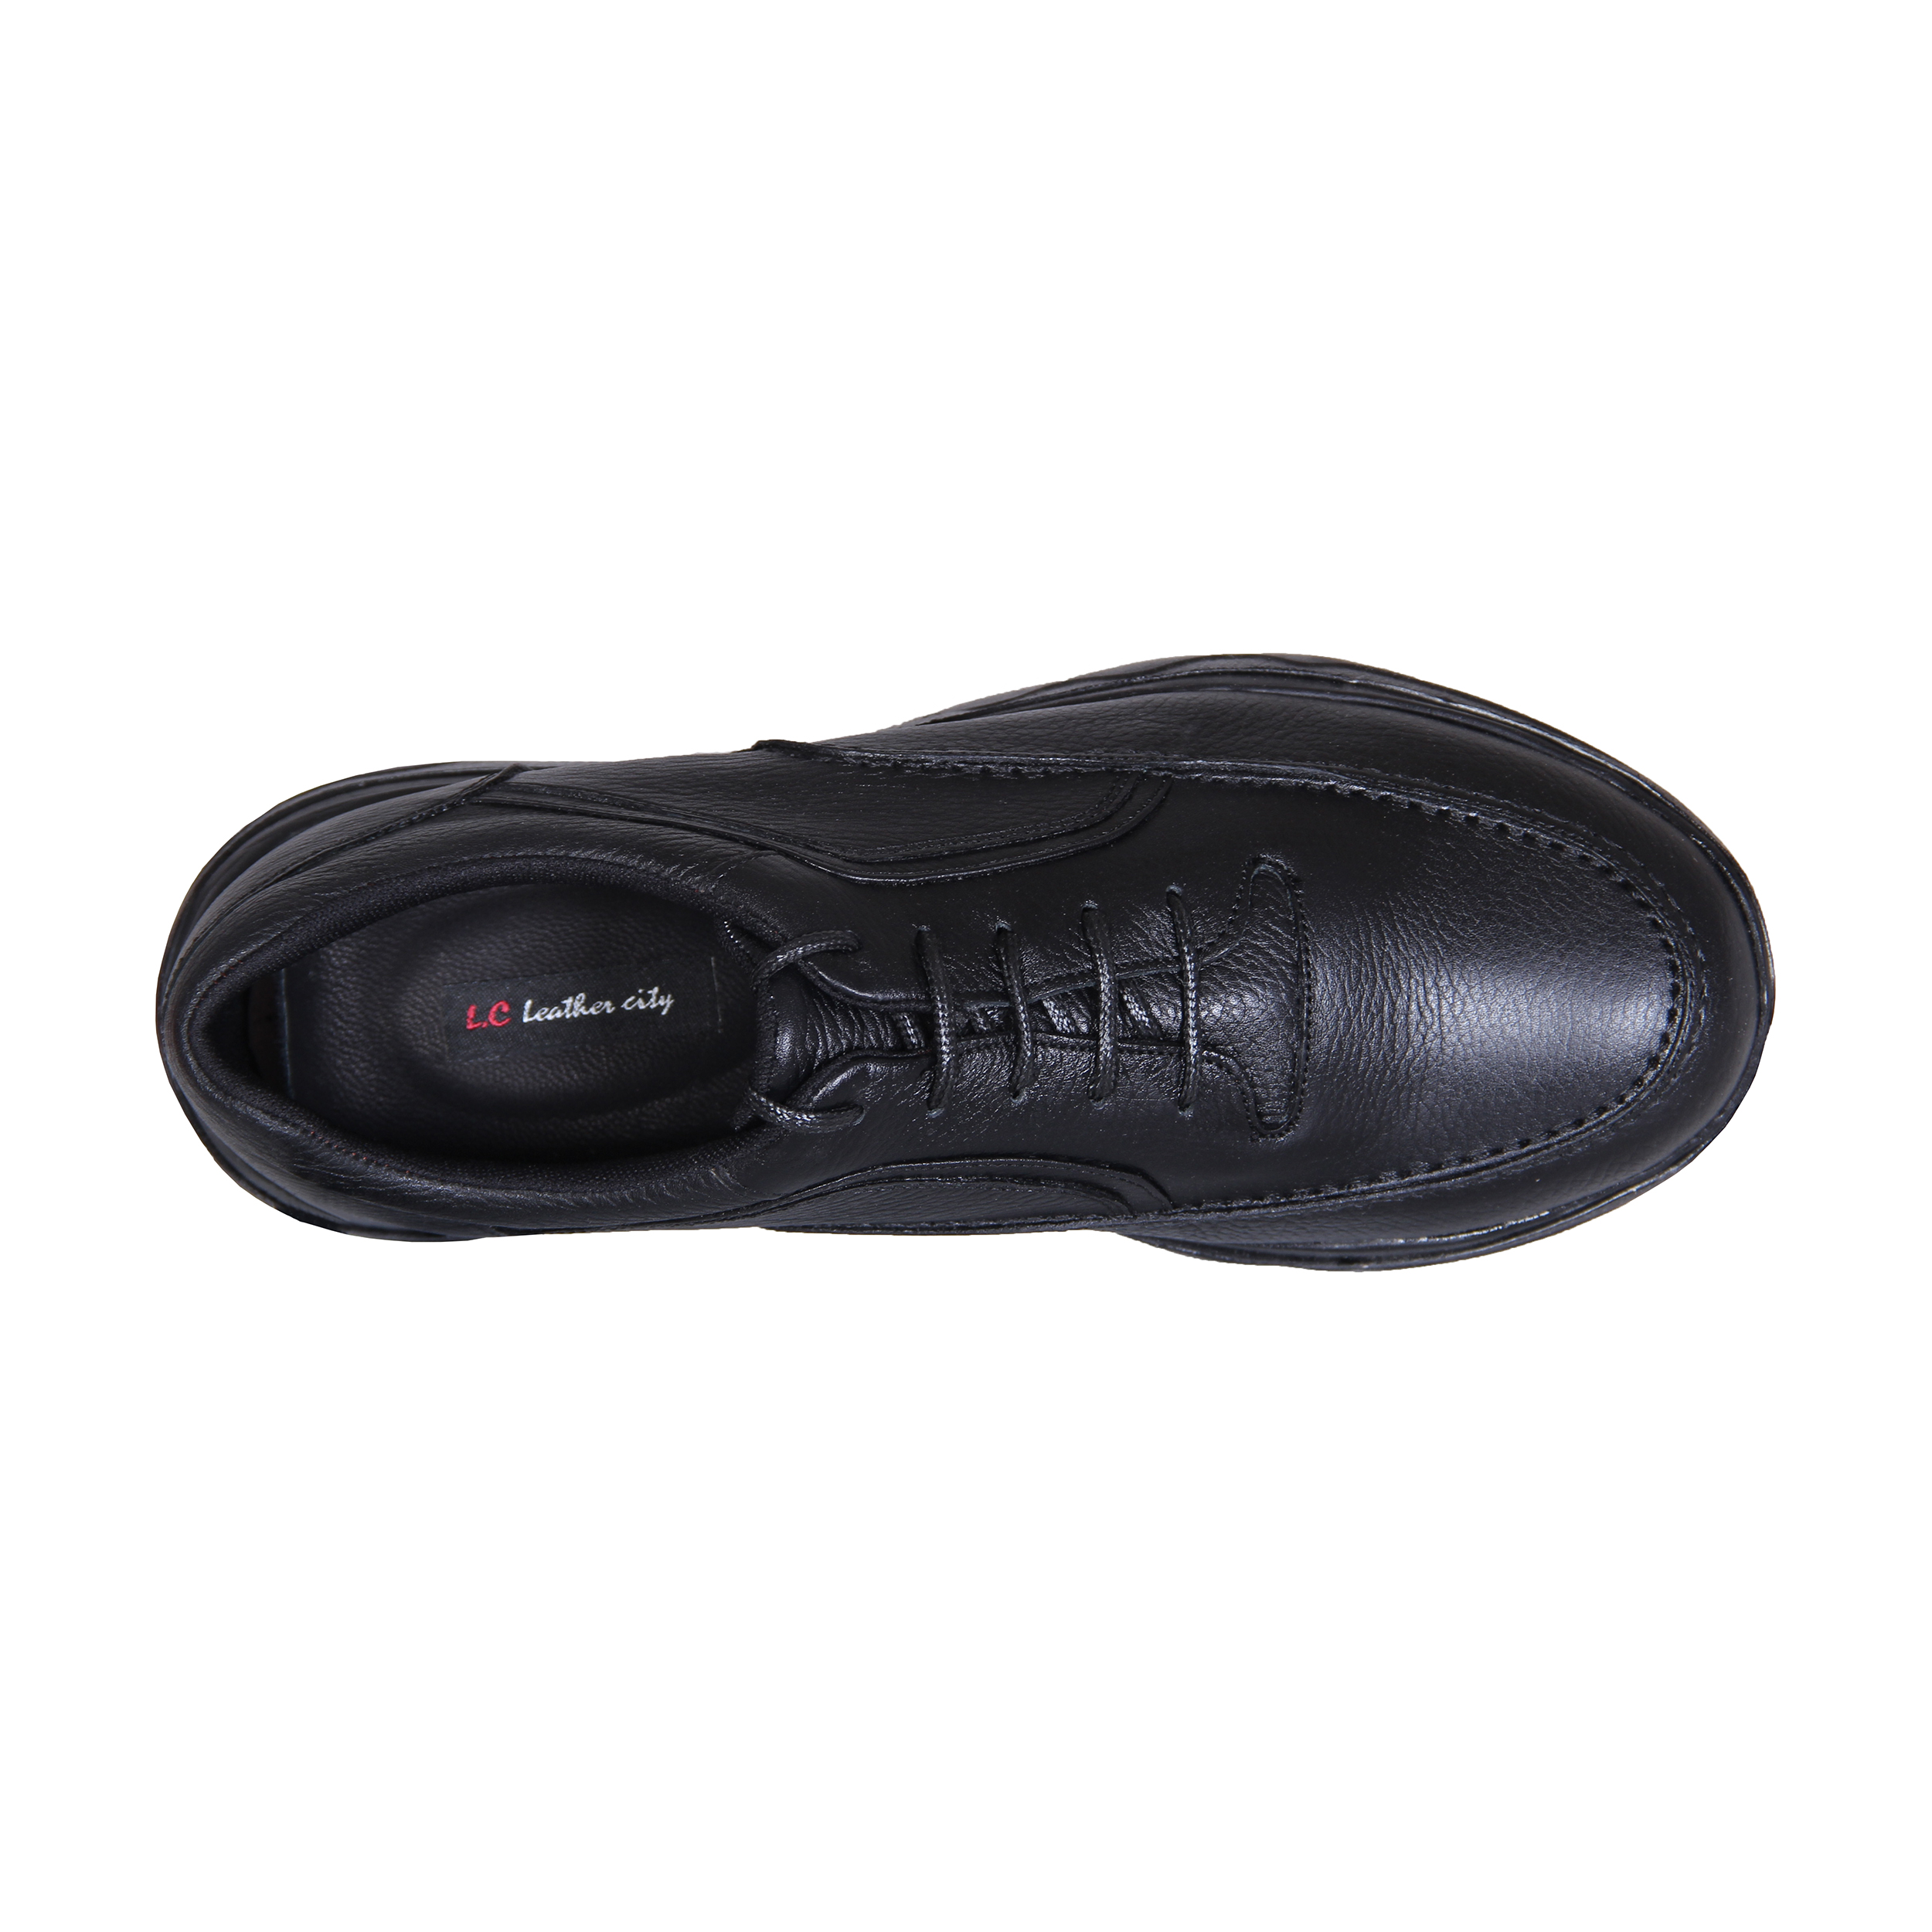 SHAHRECHARM leather men's casual shoes , F6056-1 Model